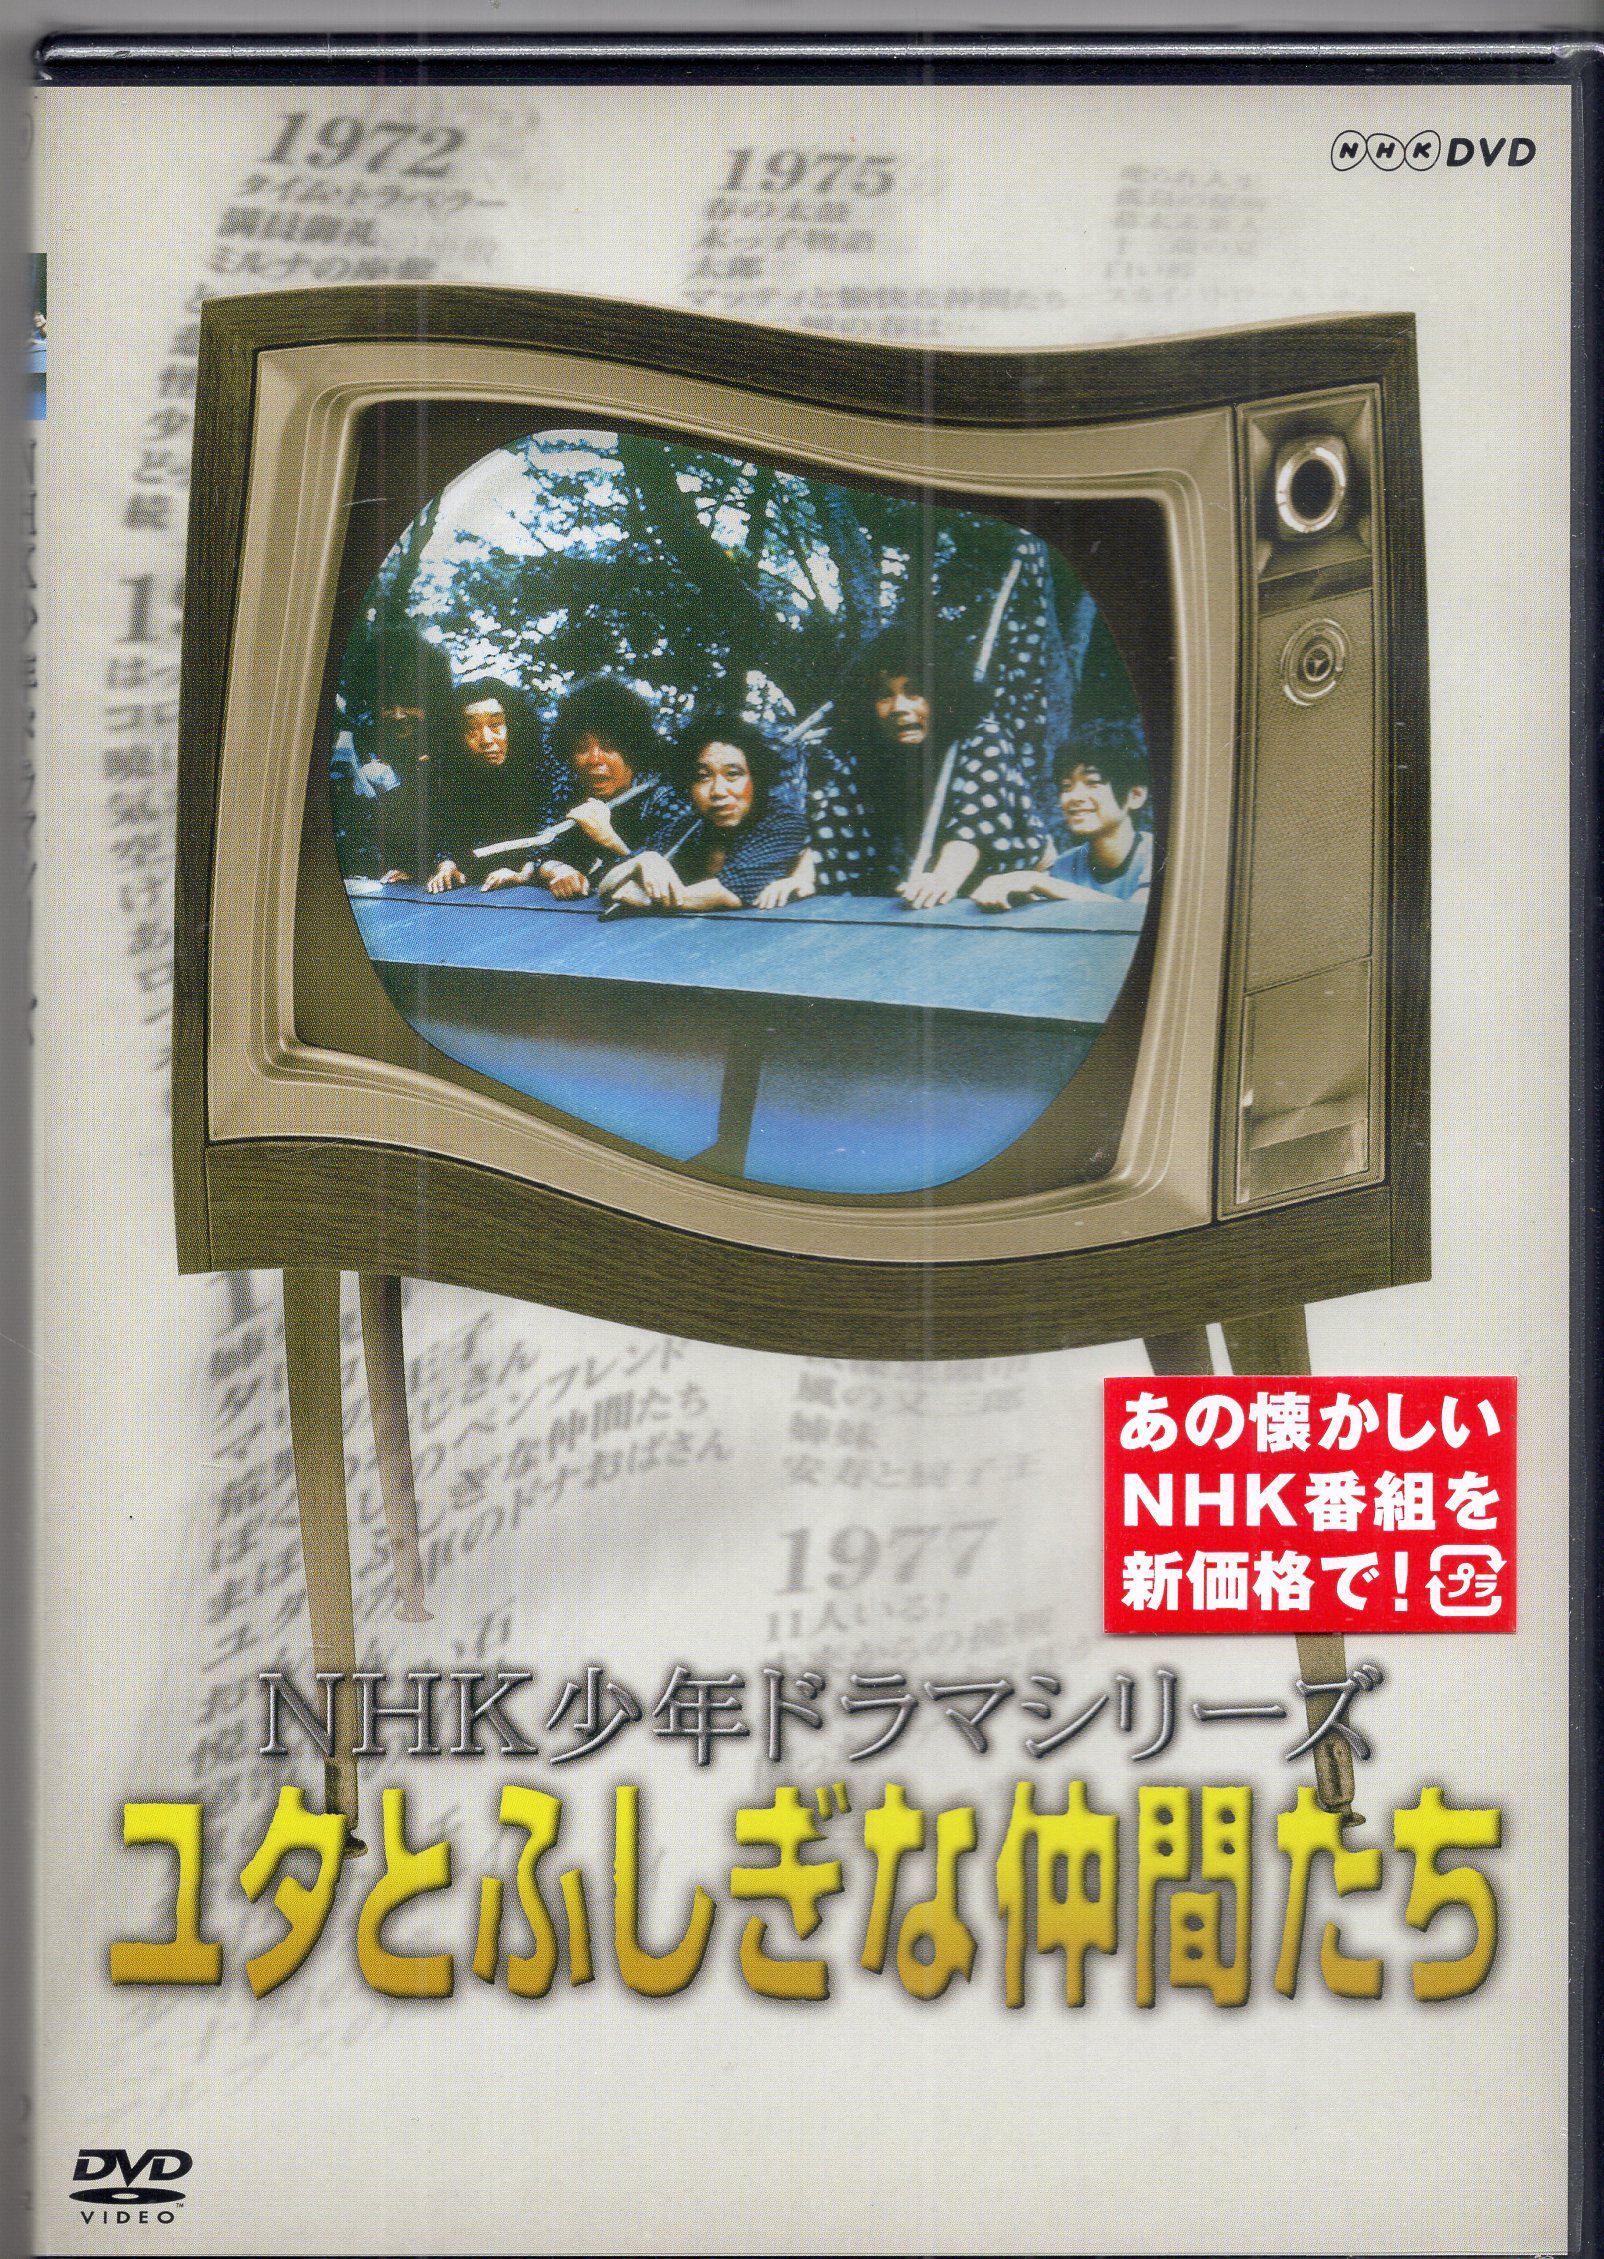 NHK少年ドラマシリーズのすべて 増山久明 アスキー出版局 - TVドラマ